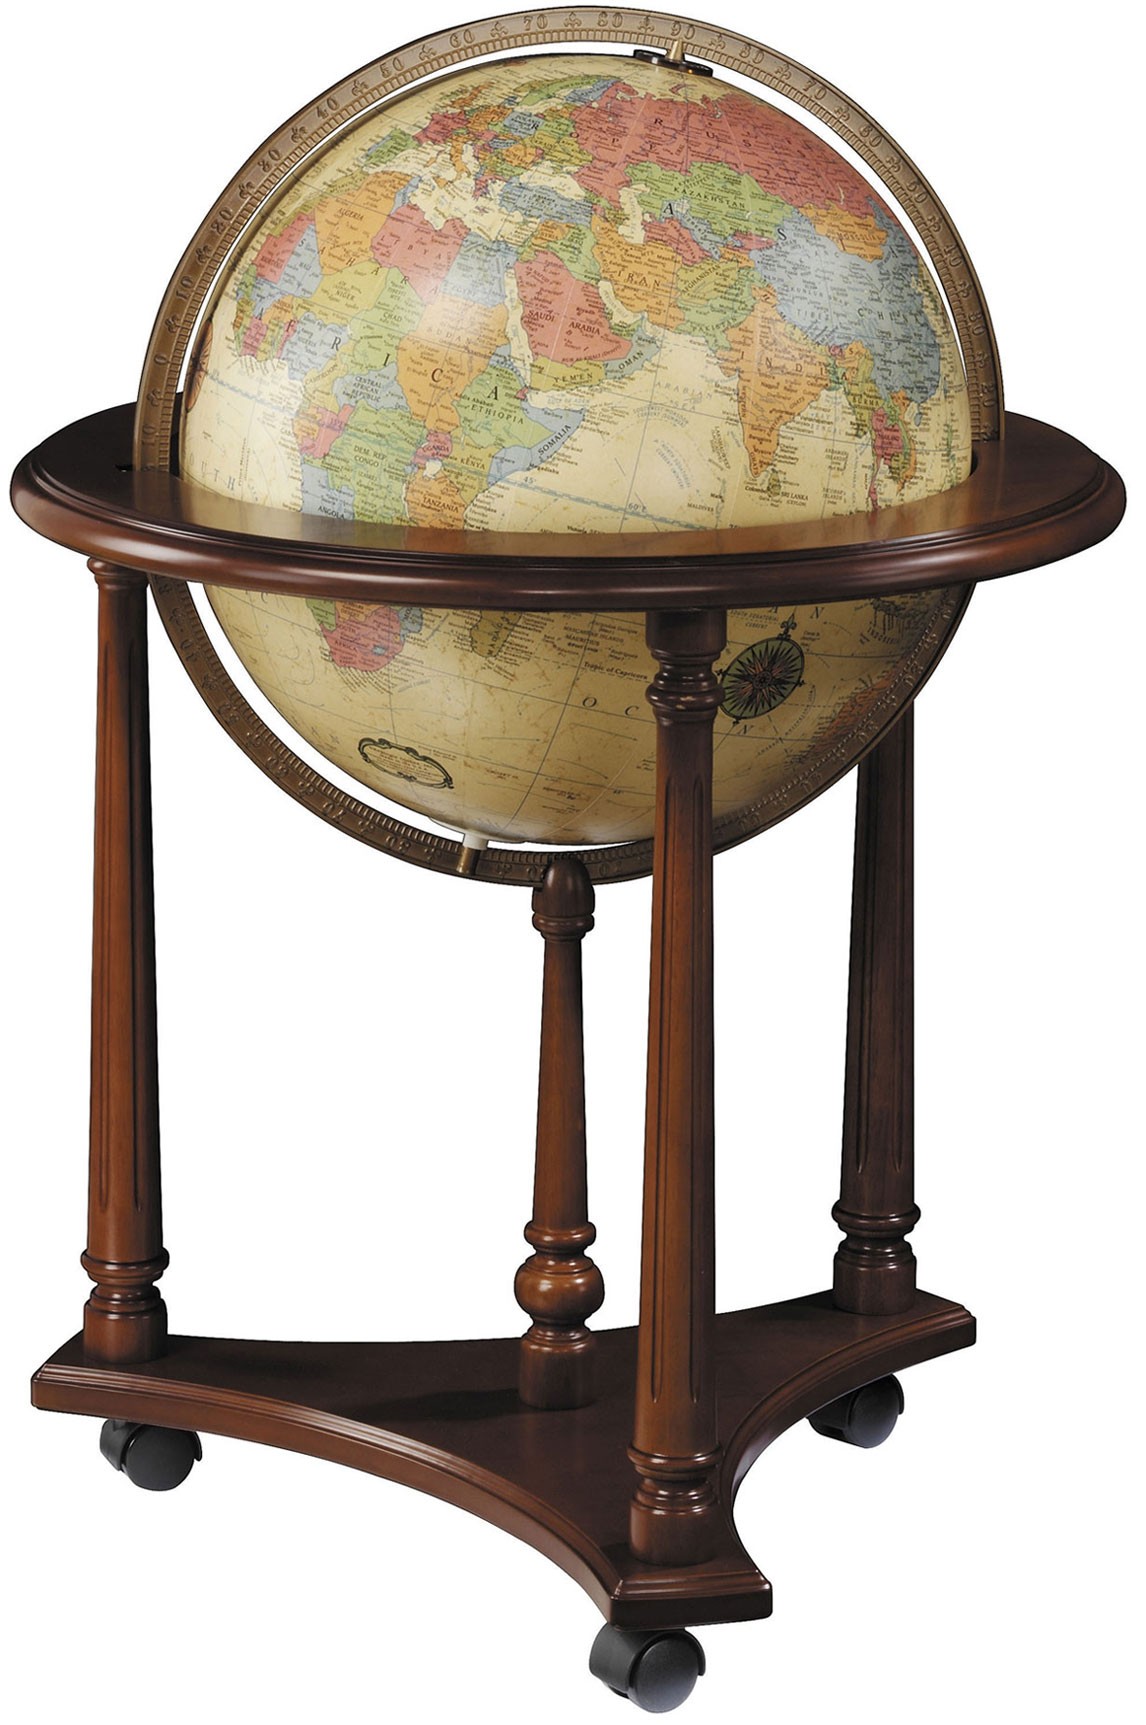 Lafayette illuminated floor globe antique by replogle